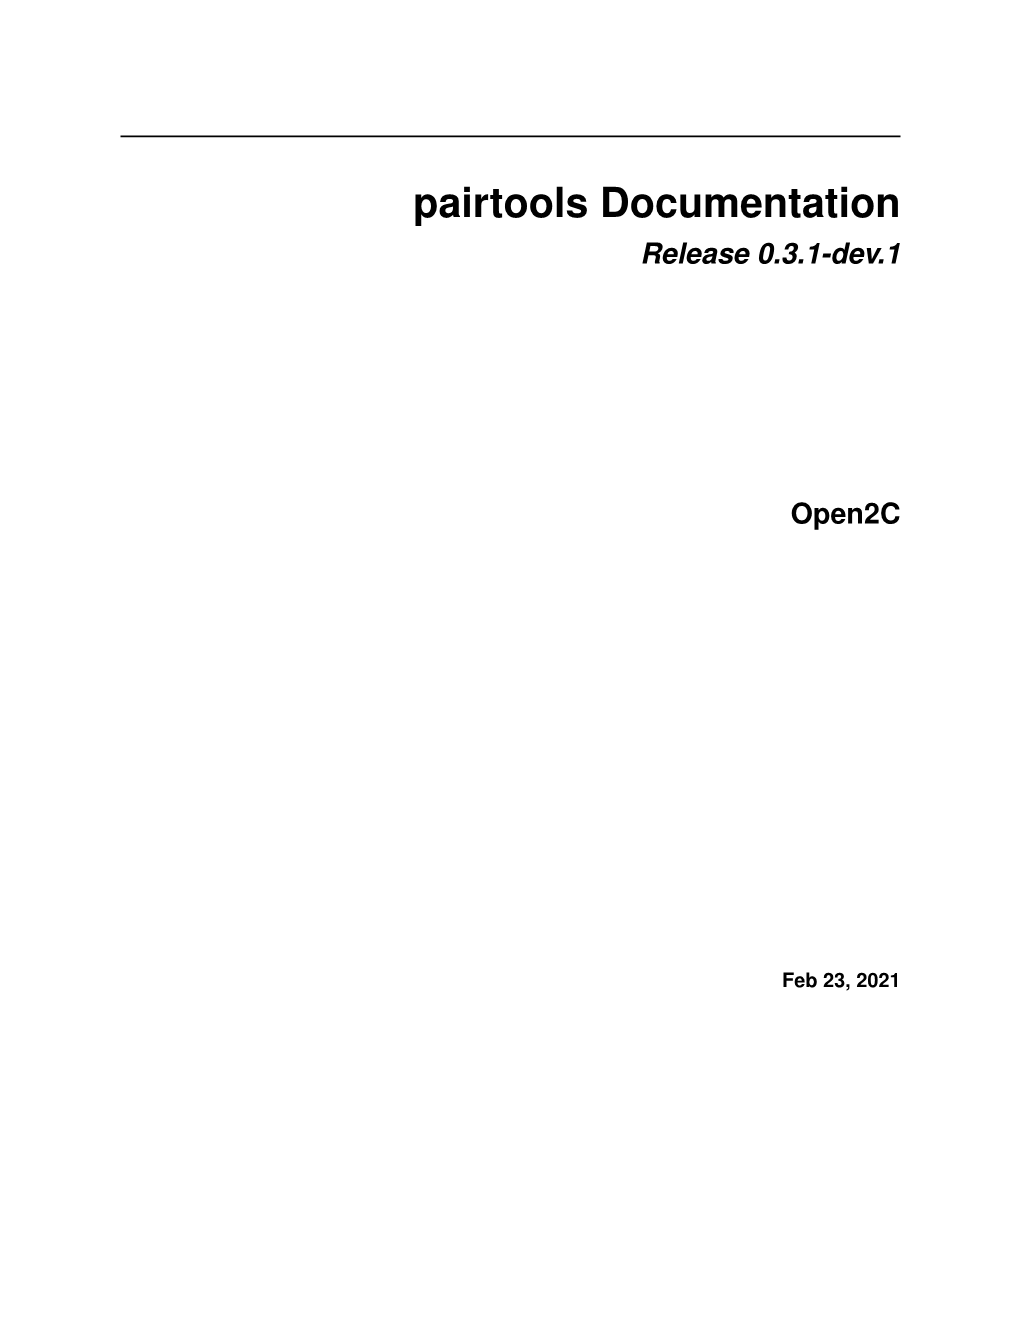 Pairtools Documentation Release 0.3.1-Dev.1